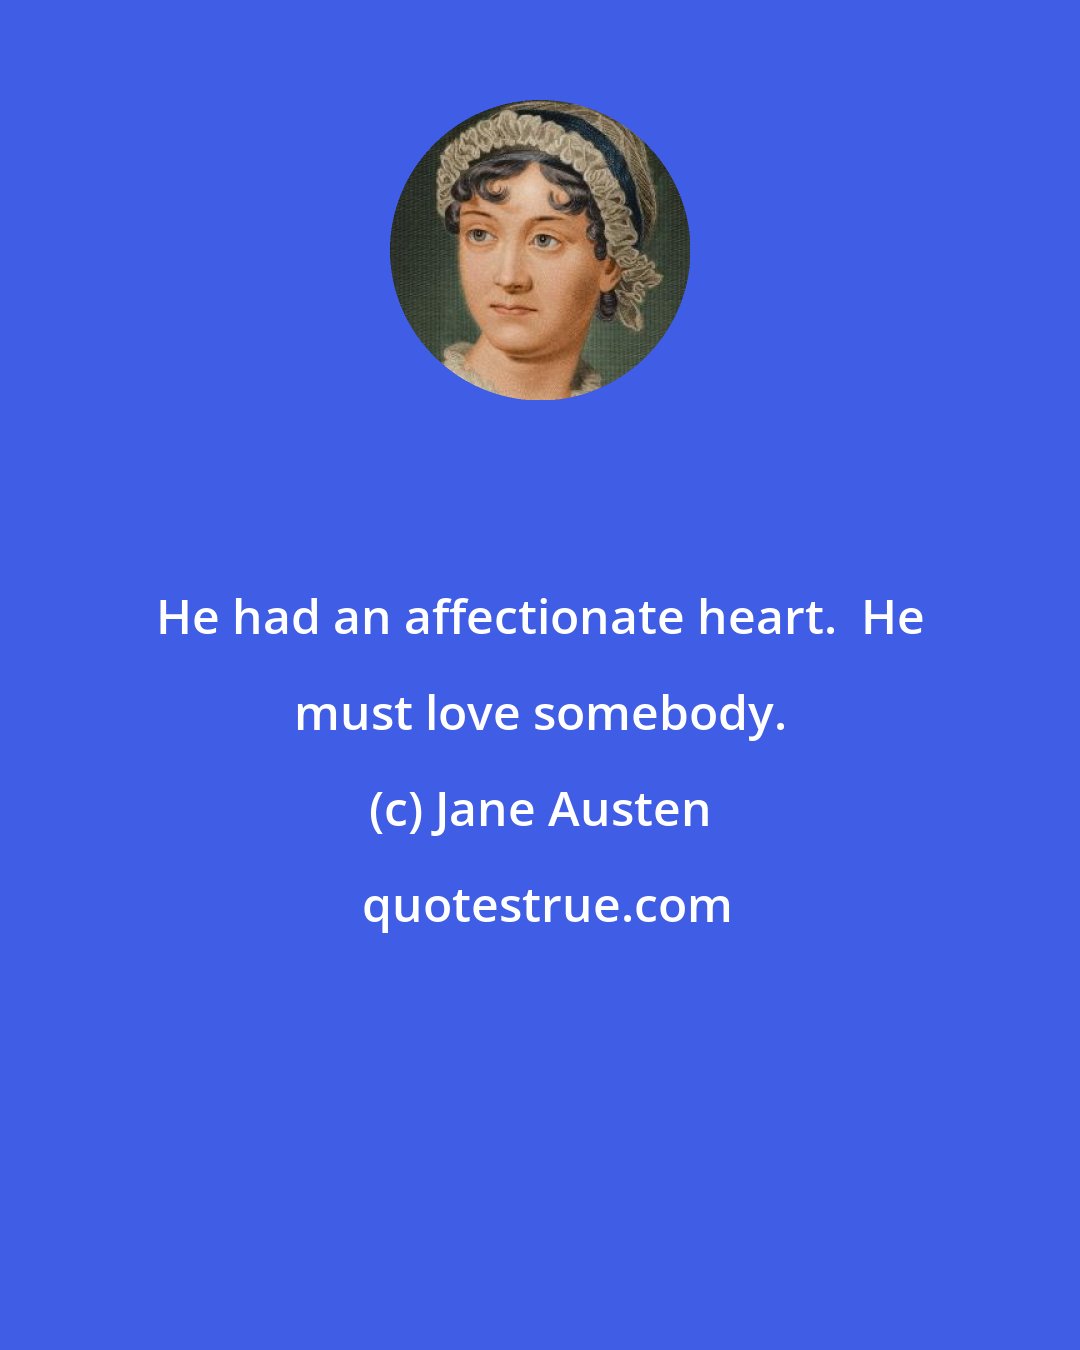 Jane Austen: He had an affectionate heart.  He must love somebody.